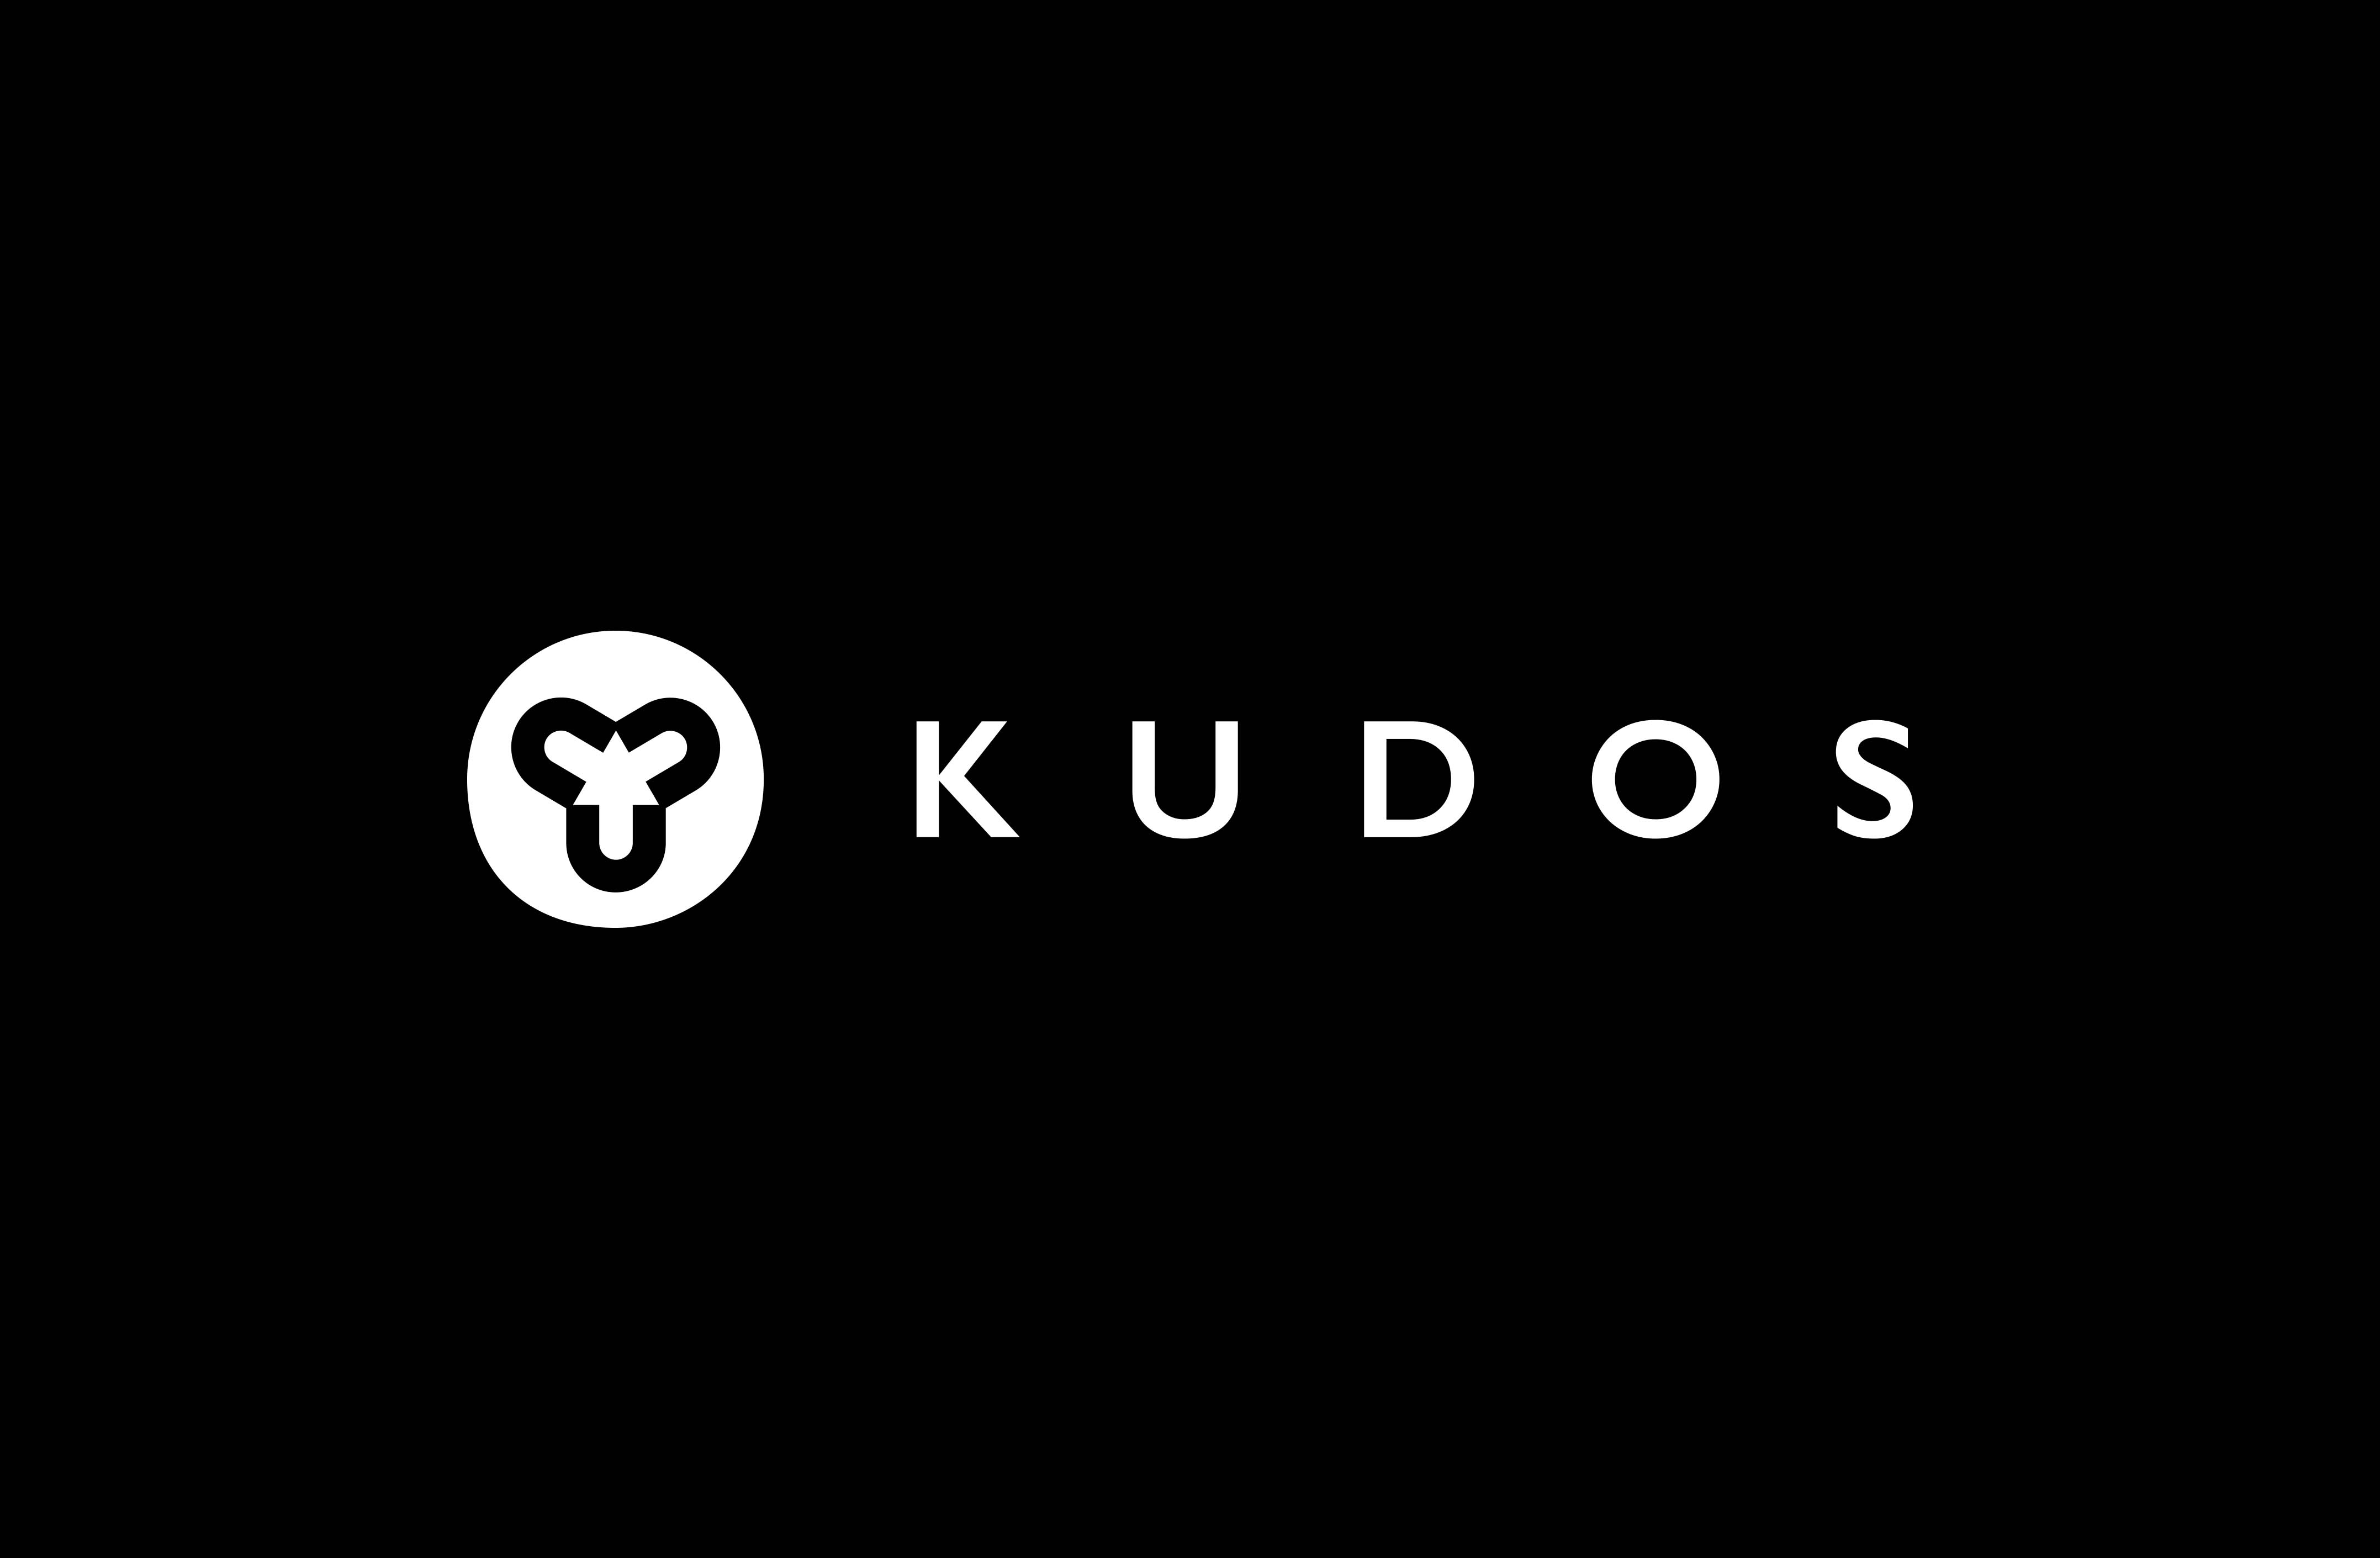 Kudos Teams Up With The Chord Company